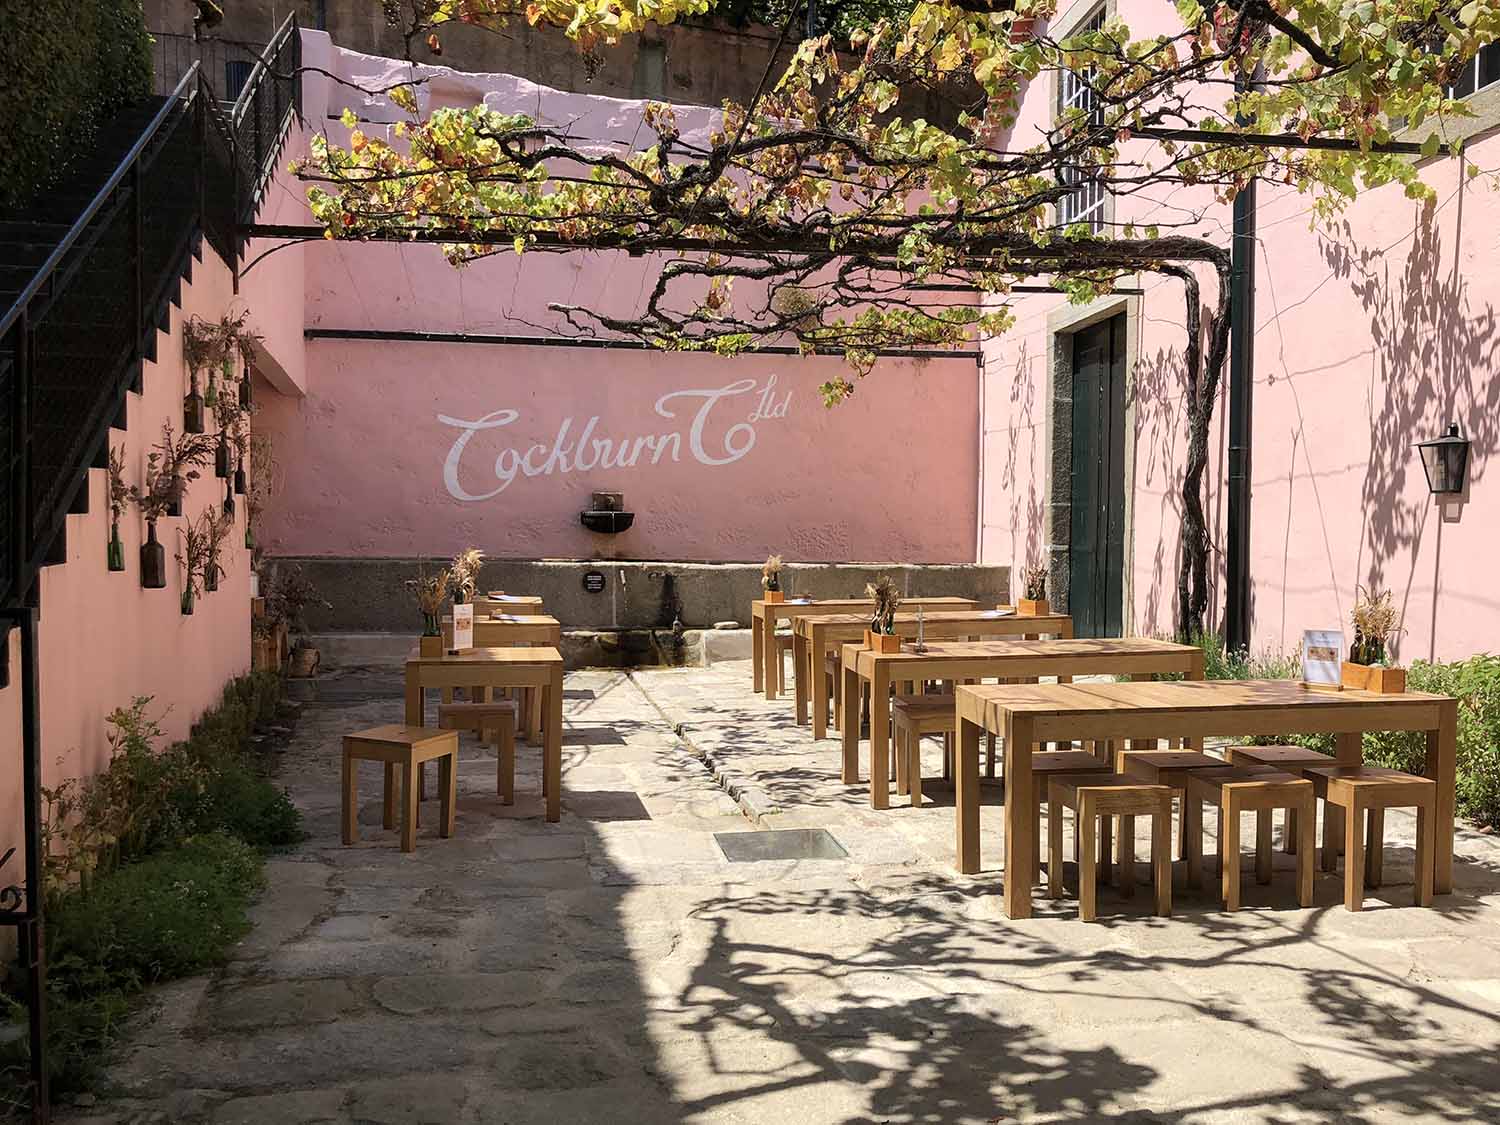 Cockburn's is a wine and port destination in Portugal